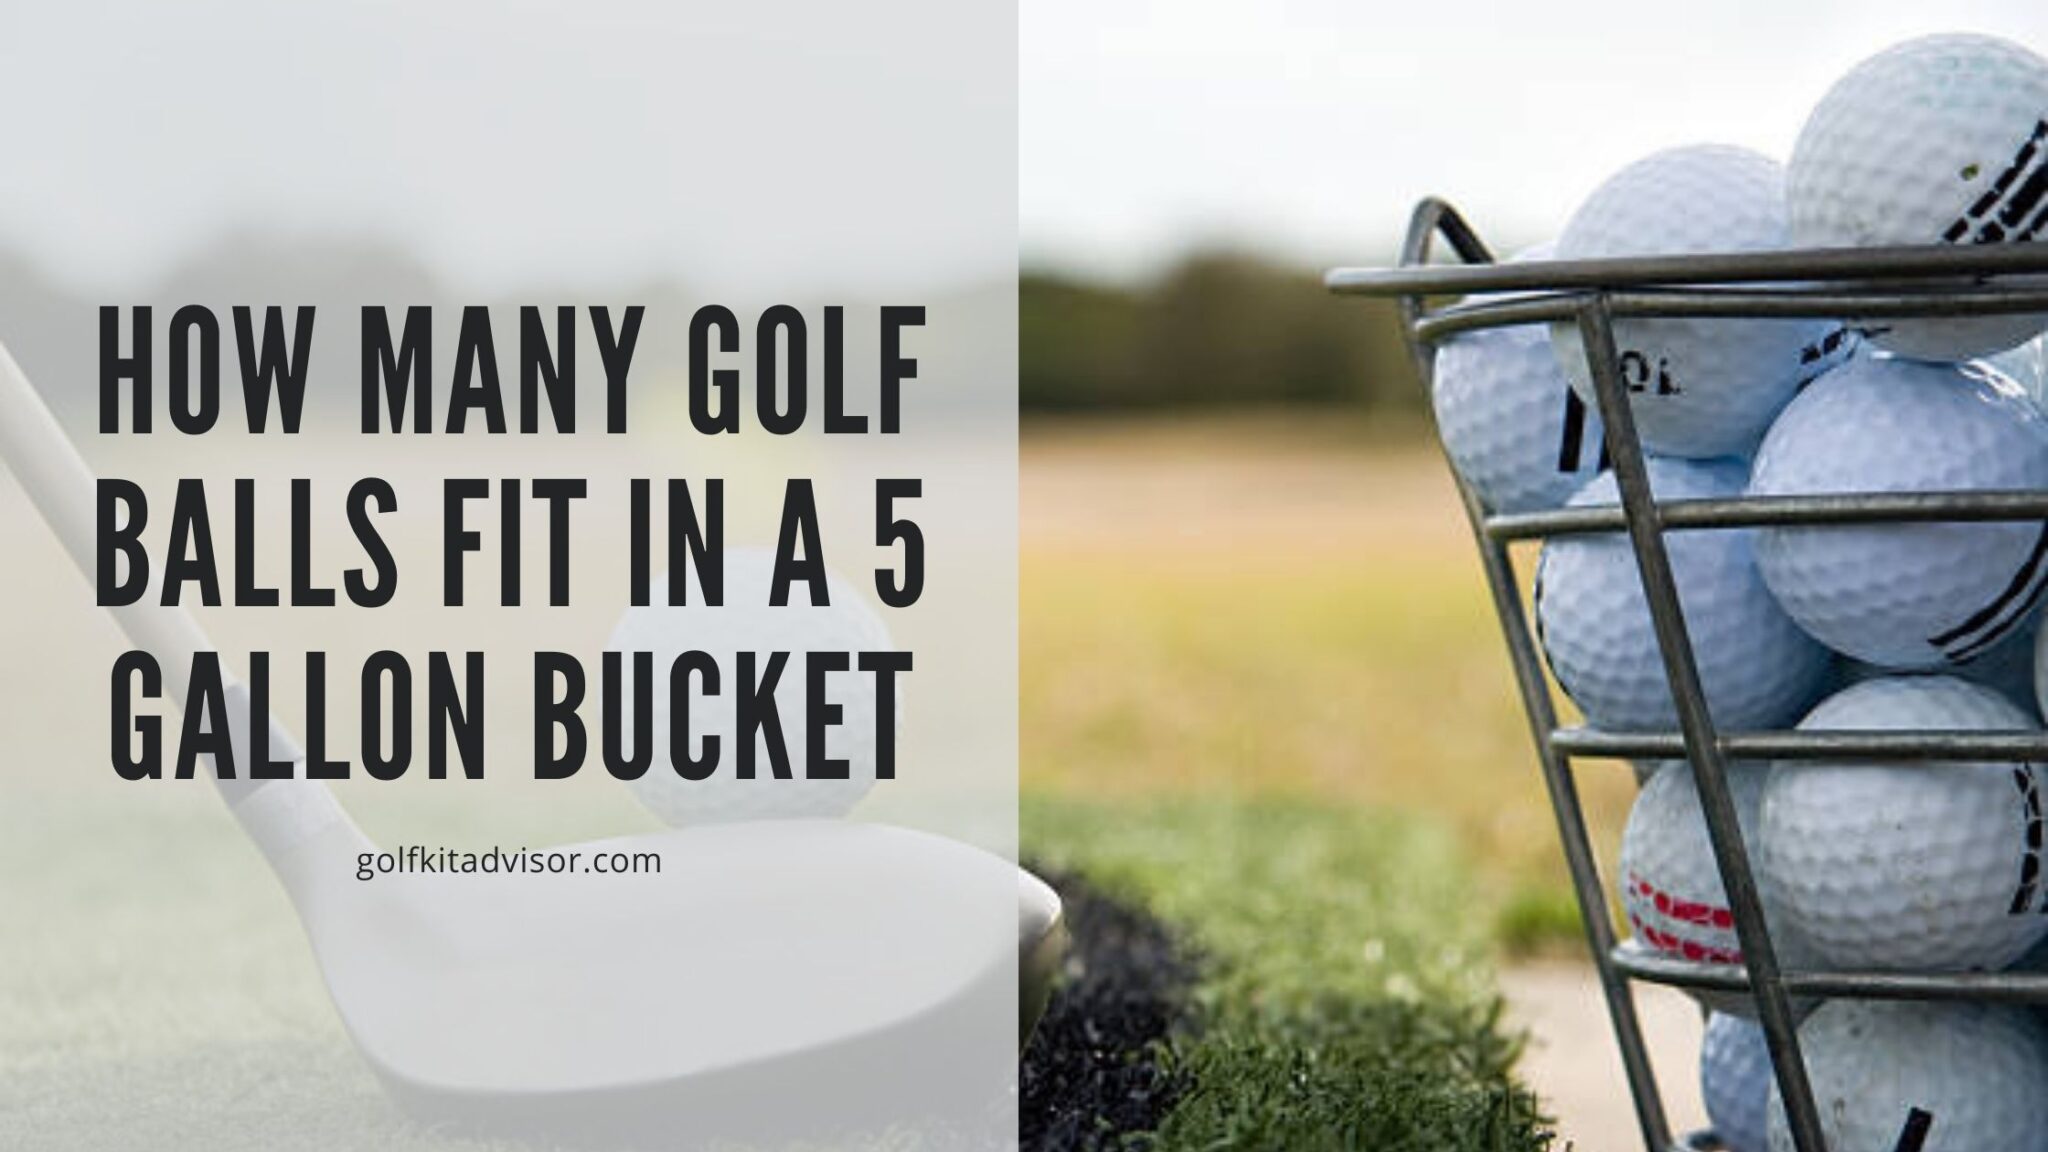 How Many Golf Balls Fit In A 5 Gallon Bucket Golf Kit Advisor